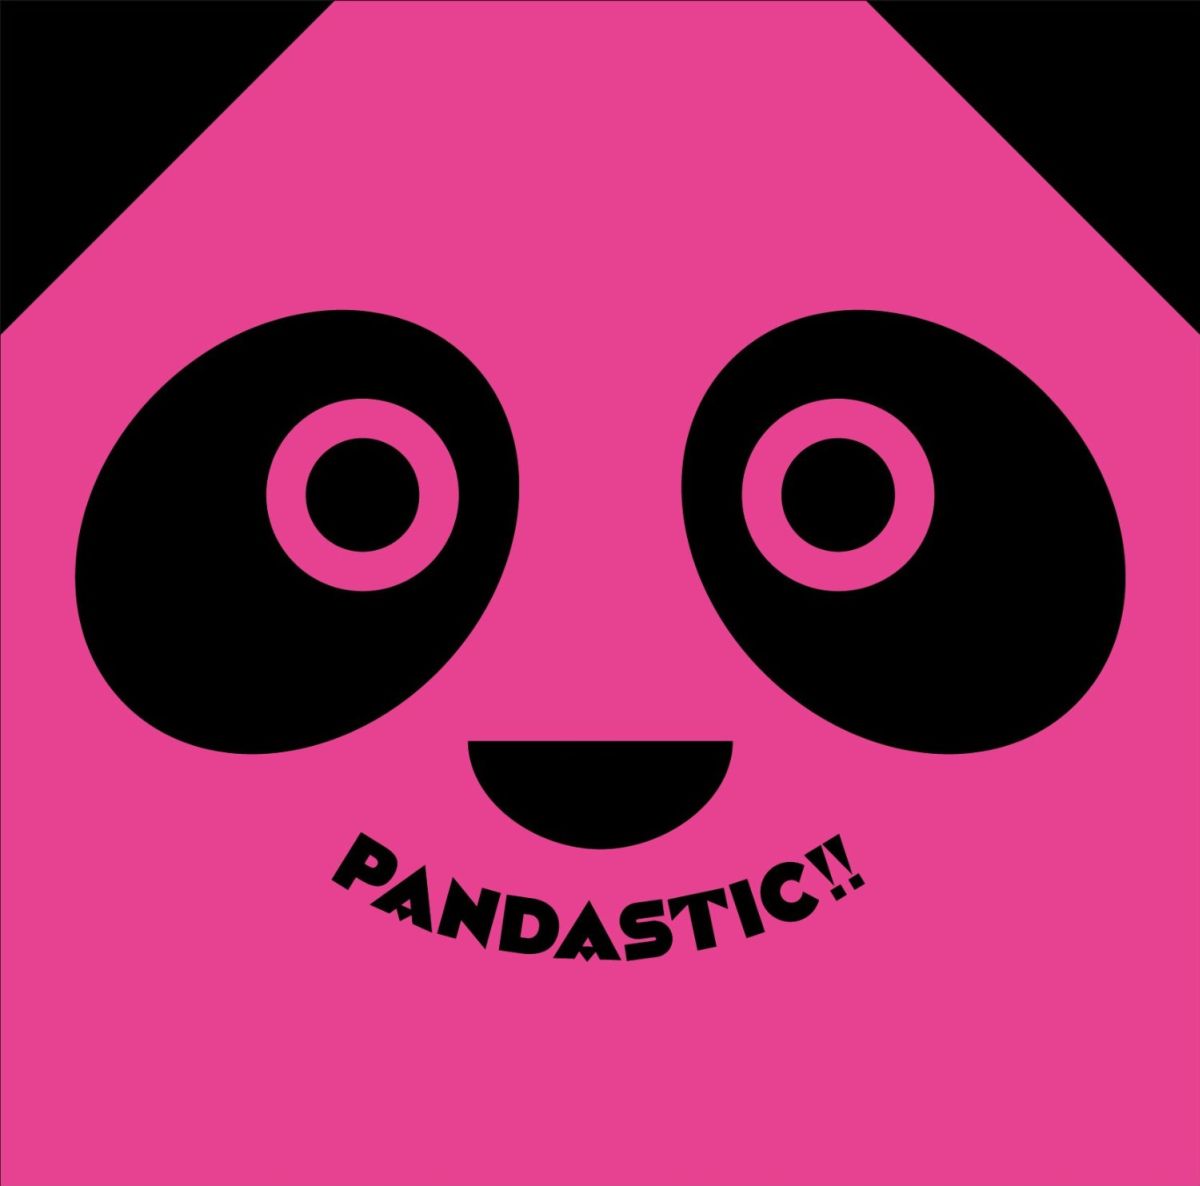 PANDASTIC!! 〜Newest Standard〜